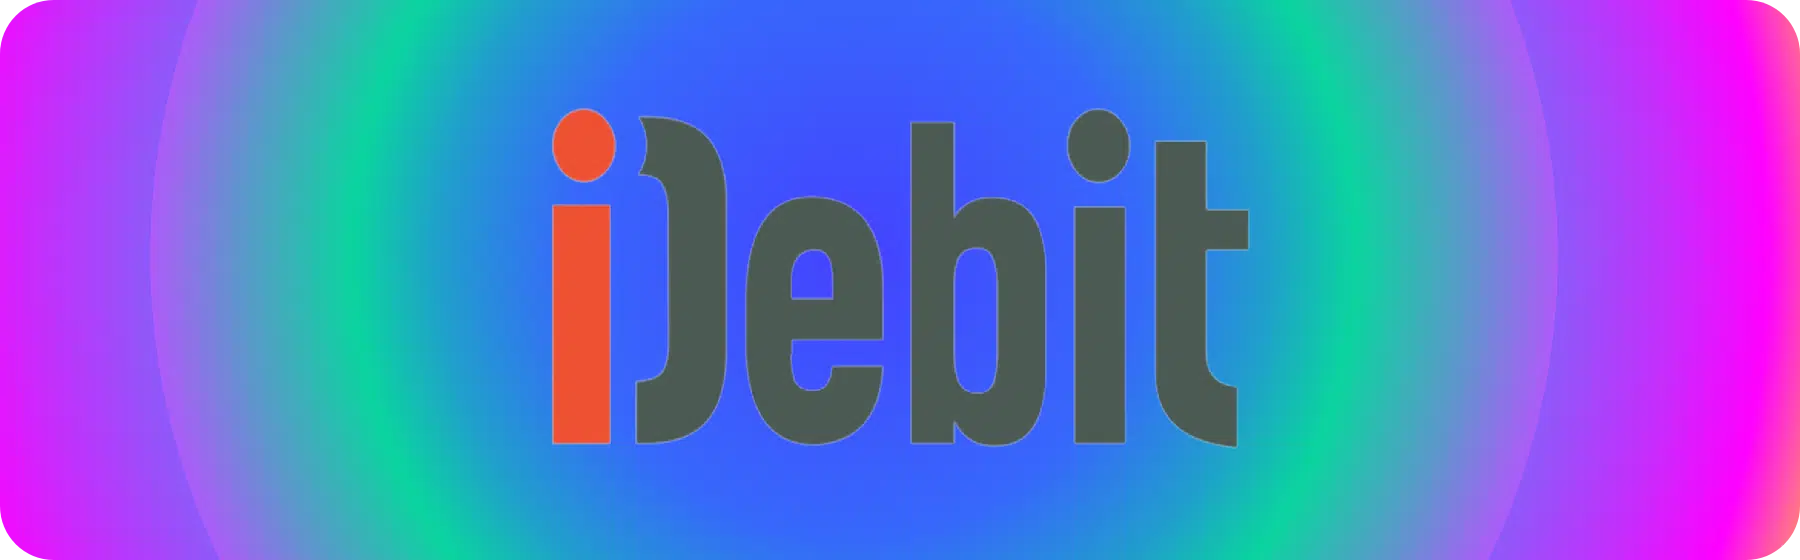 idebit payment method logo 